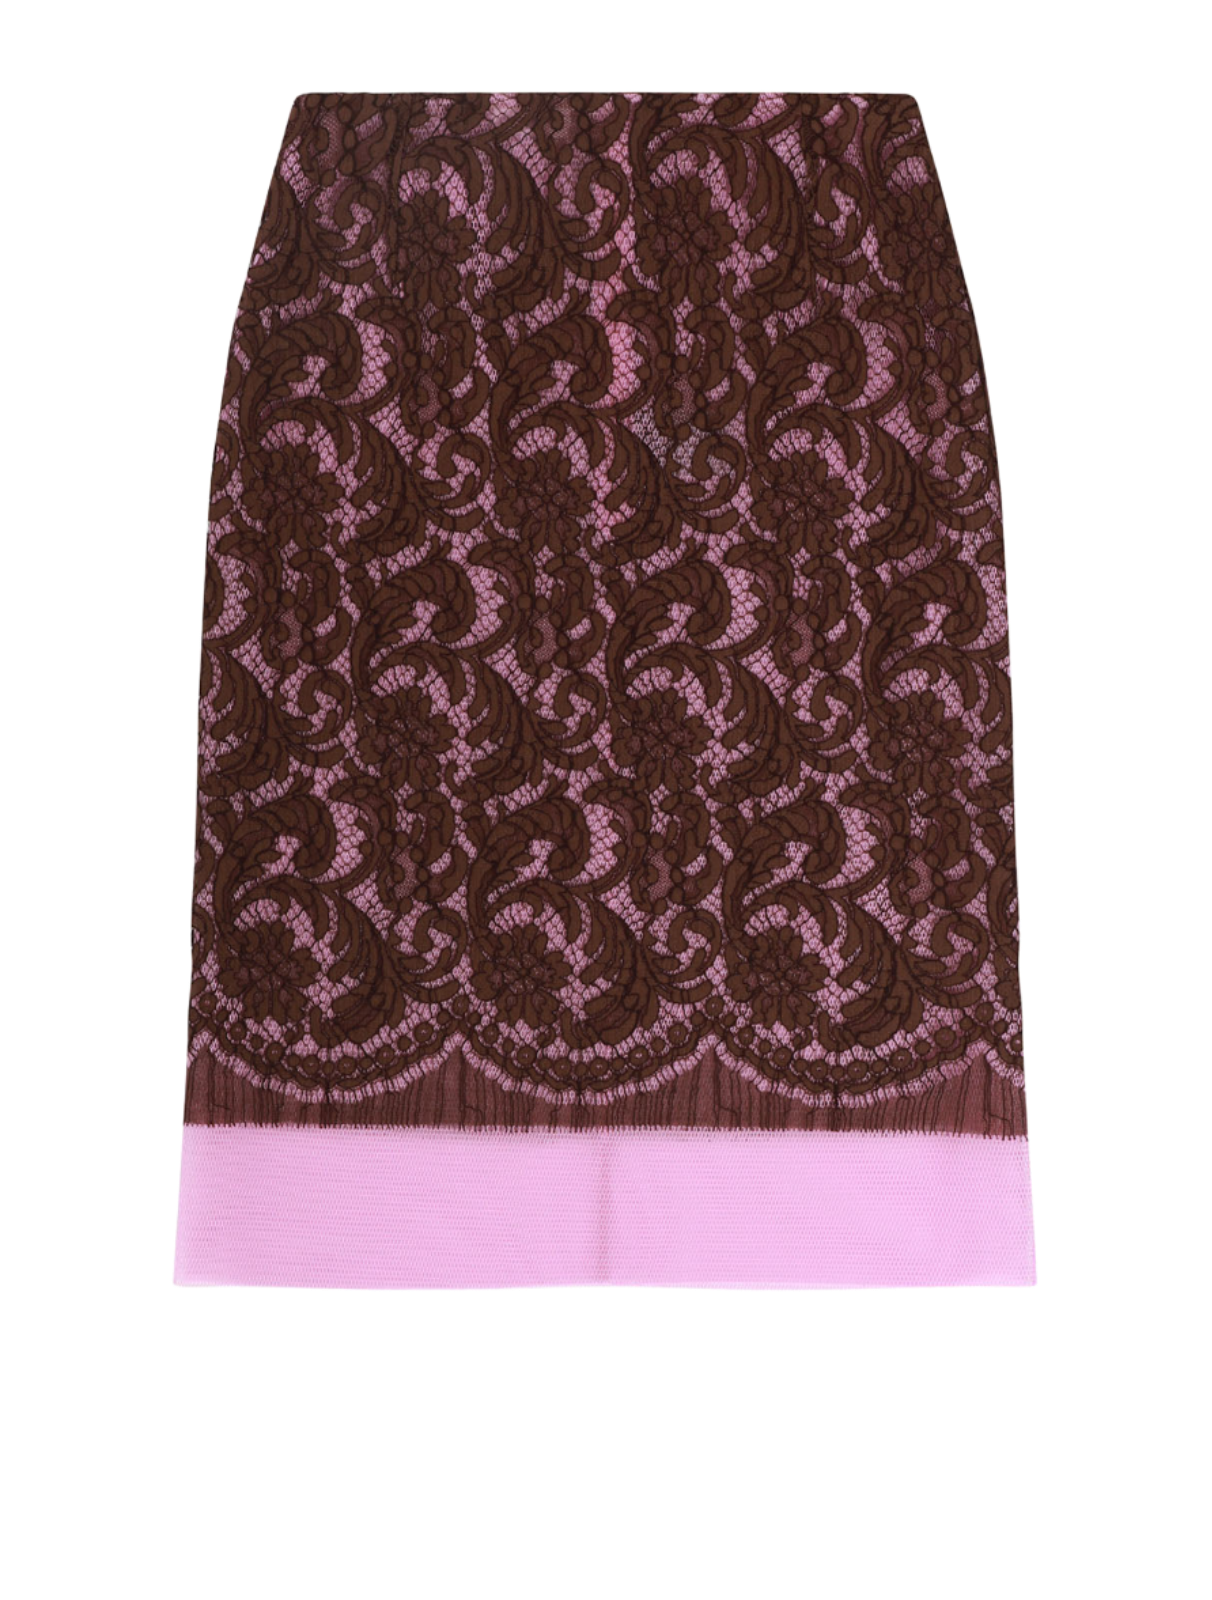 Slacy Lace Skirt